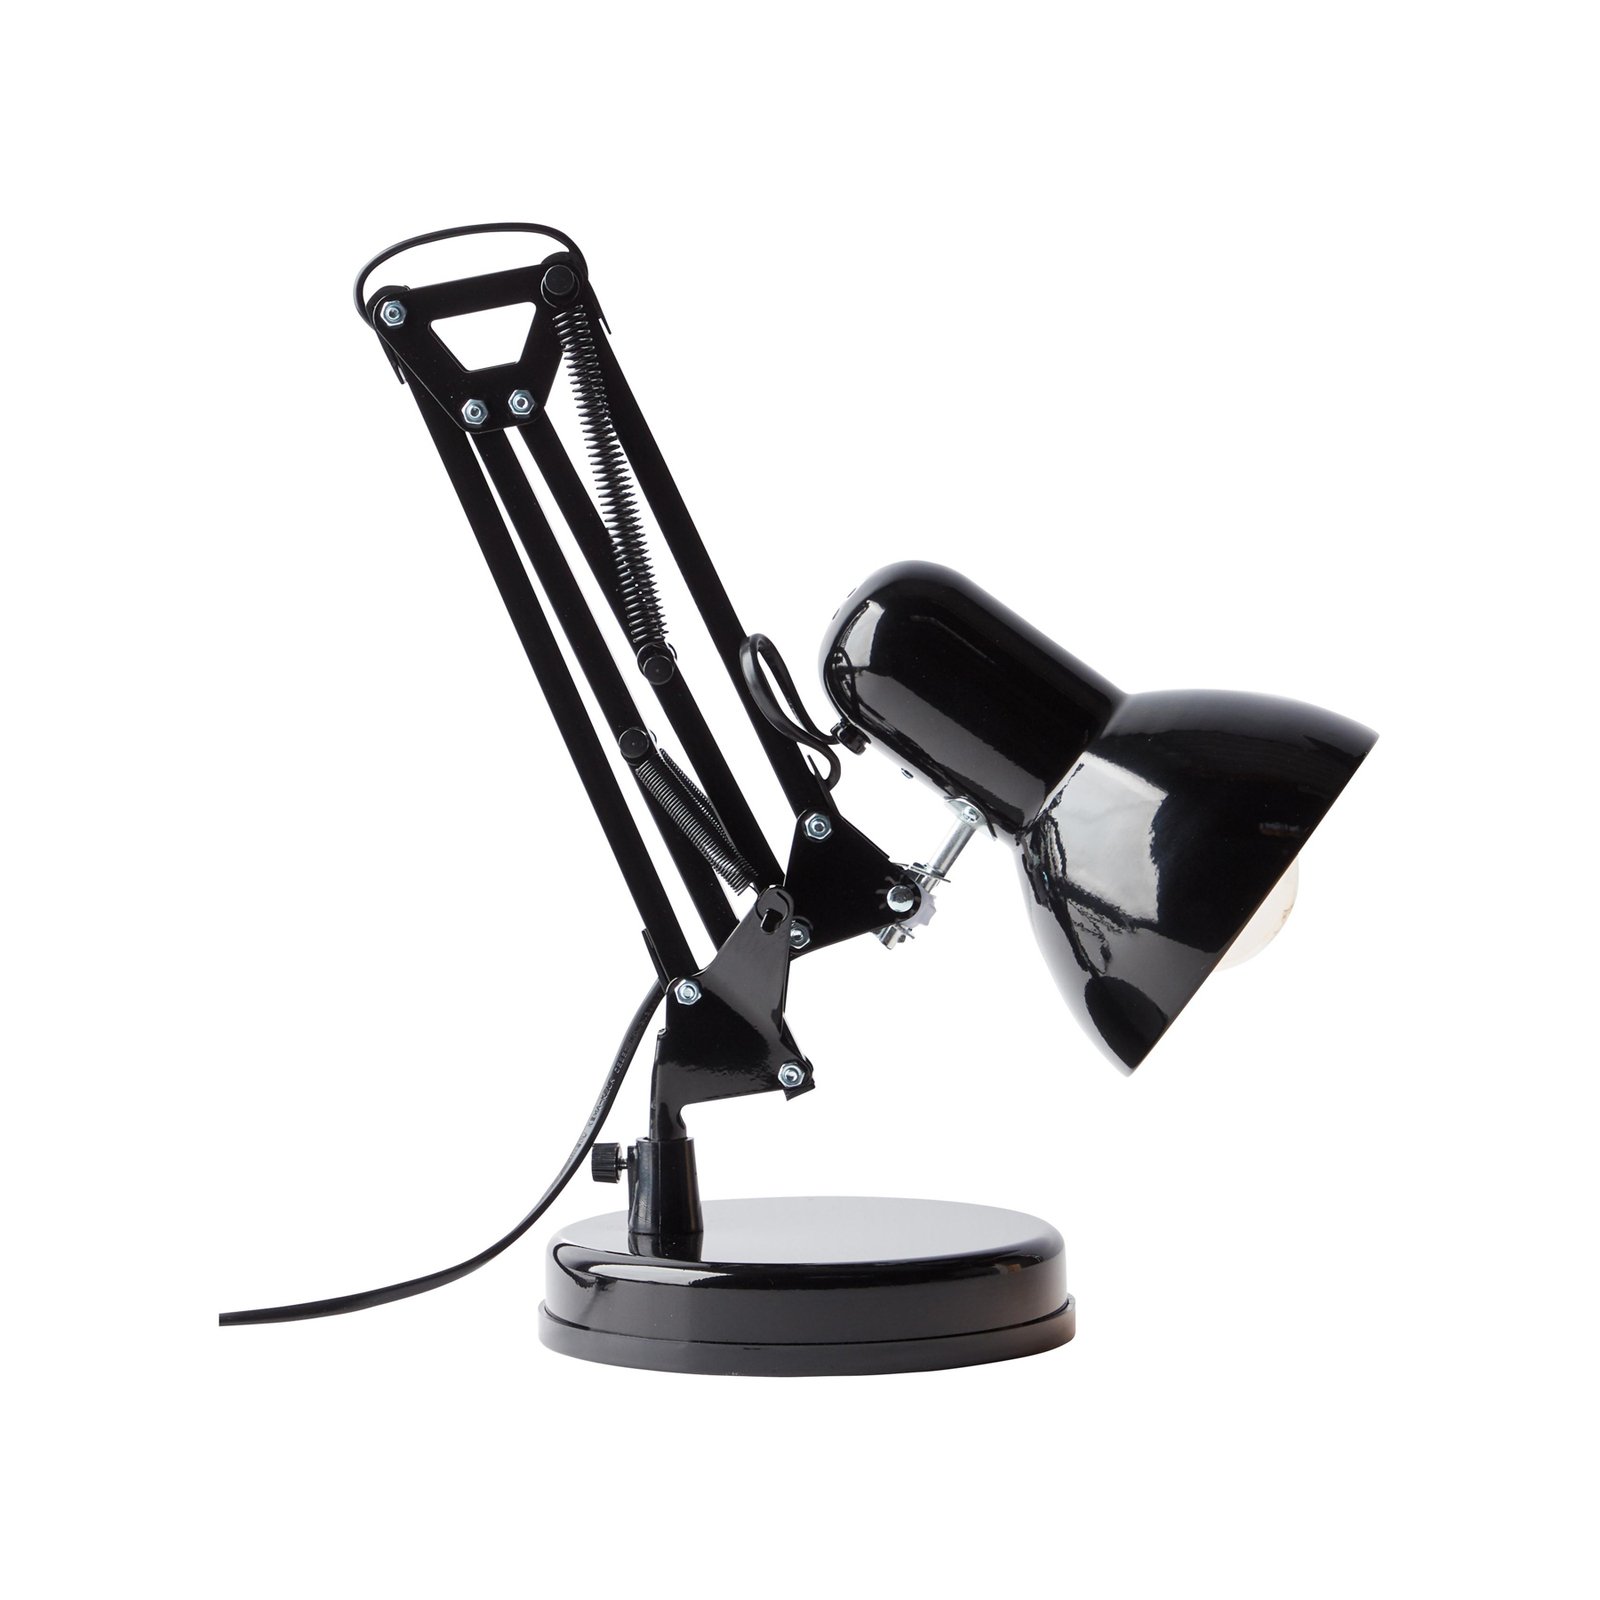 Henry skrivebordslampe, svart, høyde 50 cm, justerbar